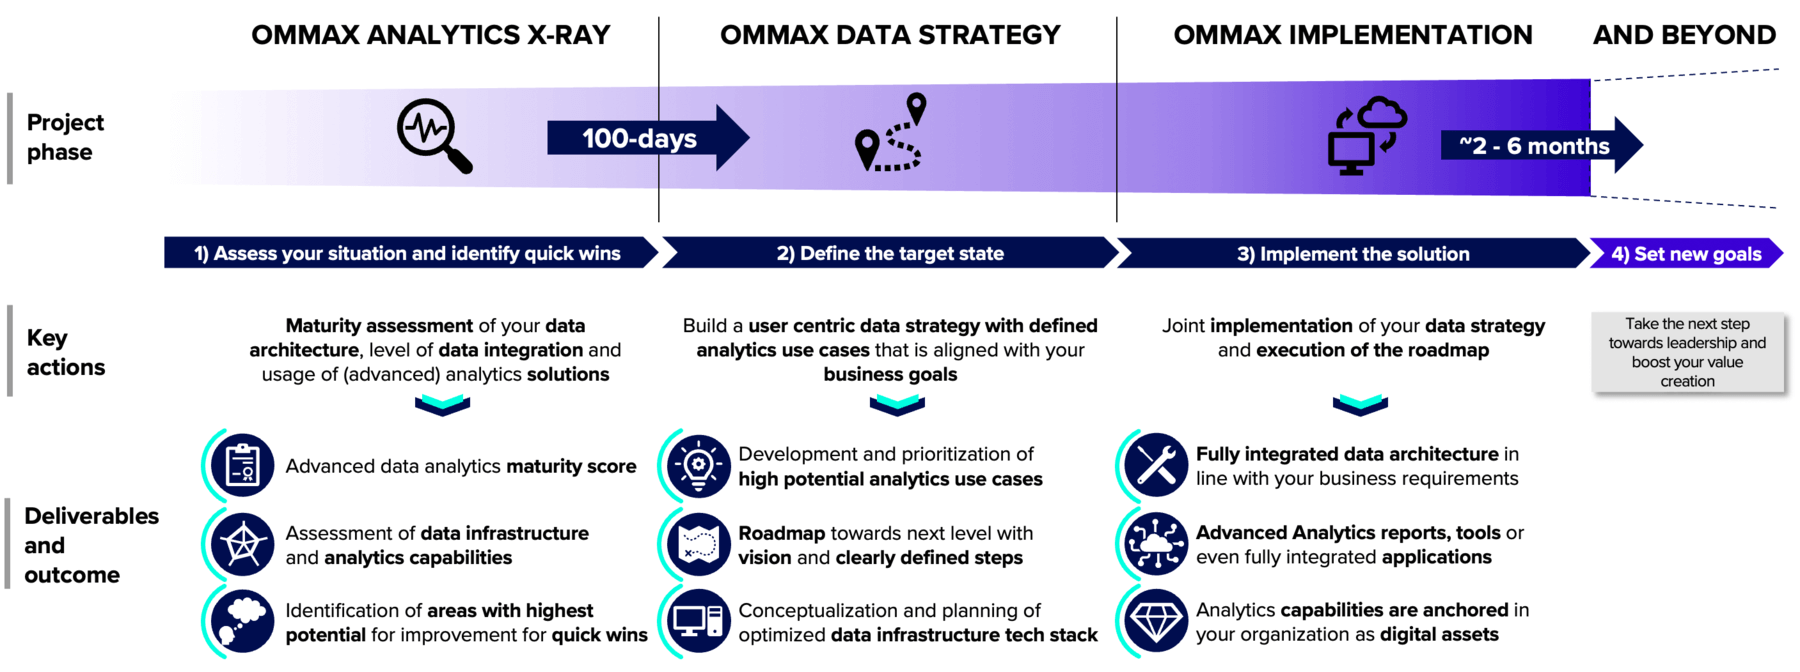 OMMAX's 100-day roadmap to advanced data analytics